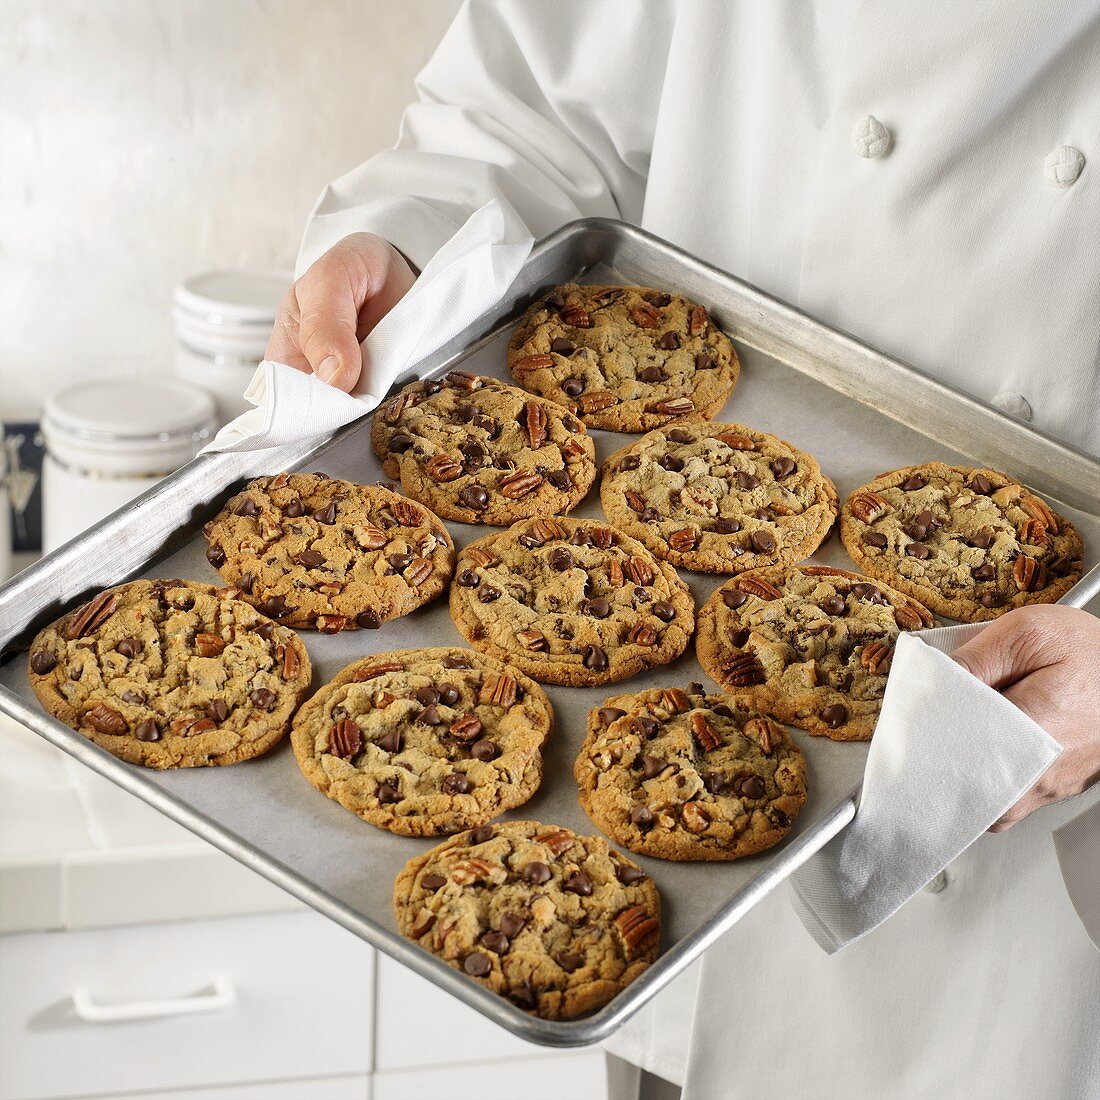 Baker holding baking tray of freshly-baked cookies